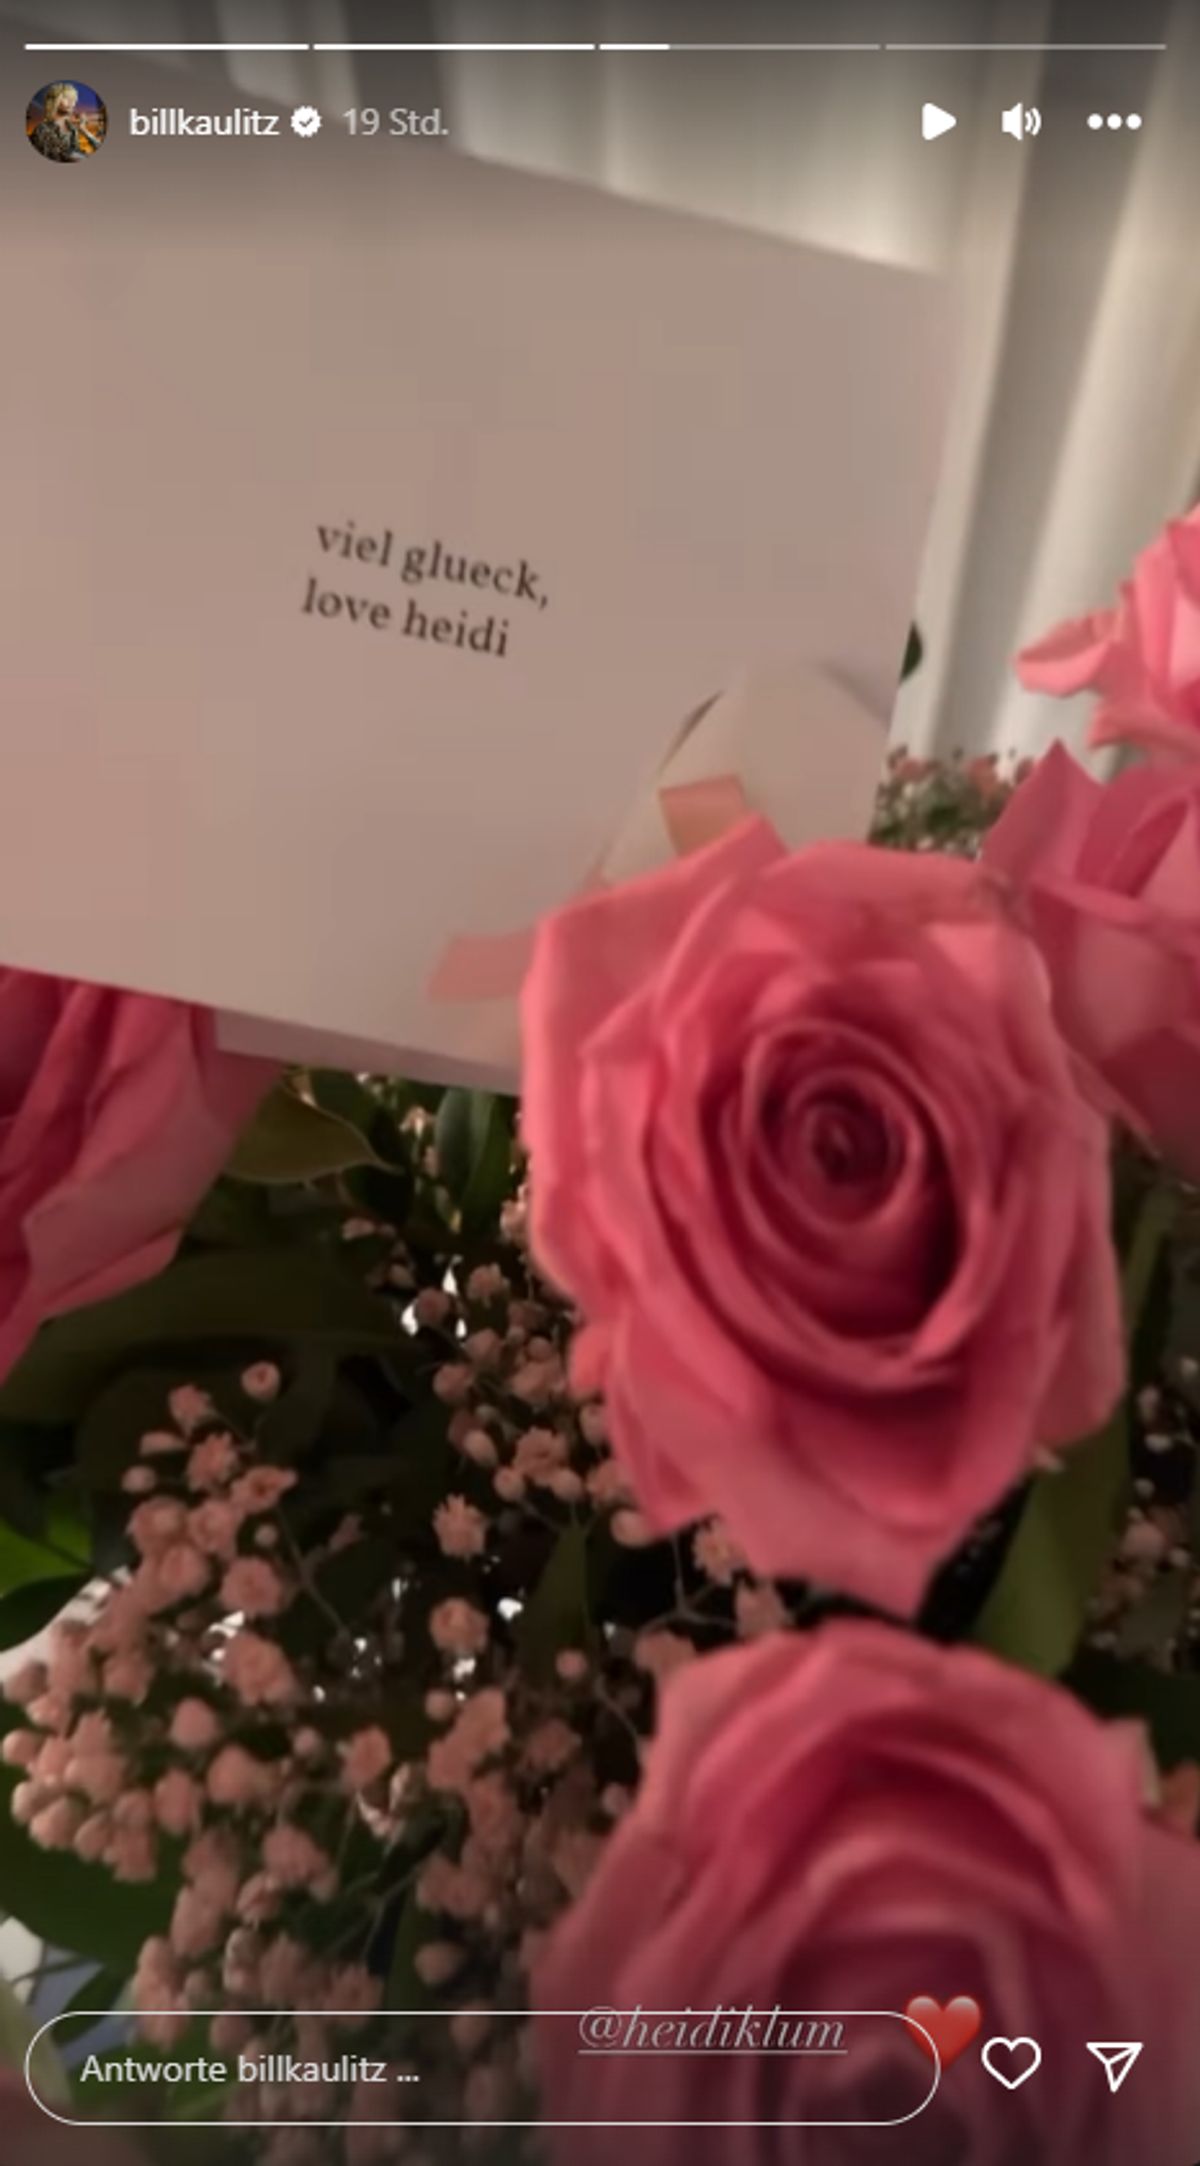 Bill Kaulitz & Heidi Klum - Blumen